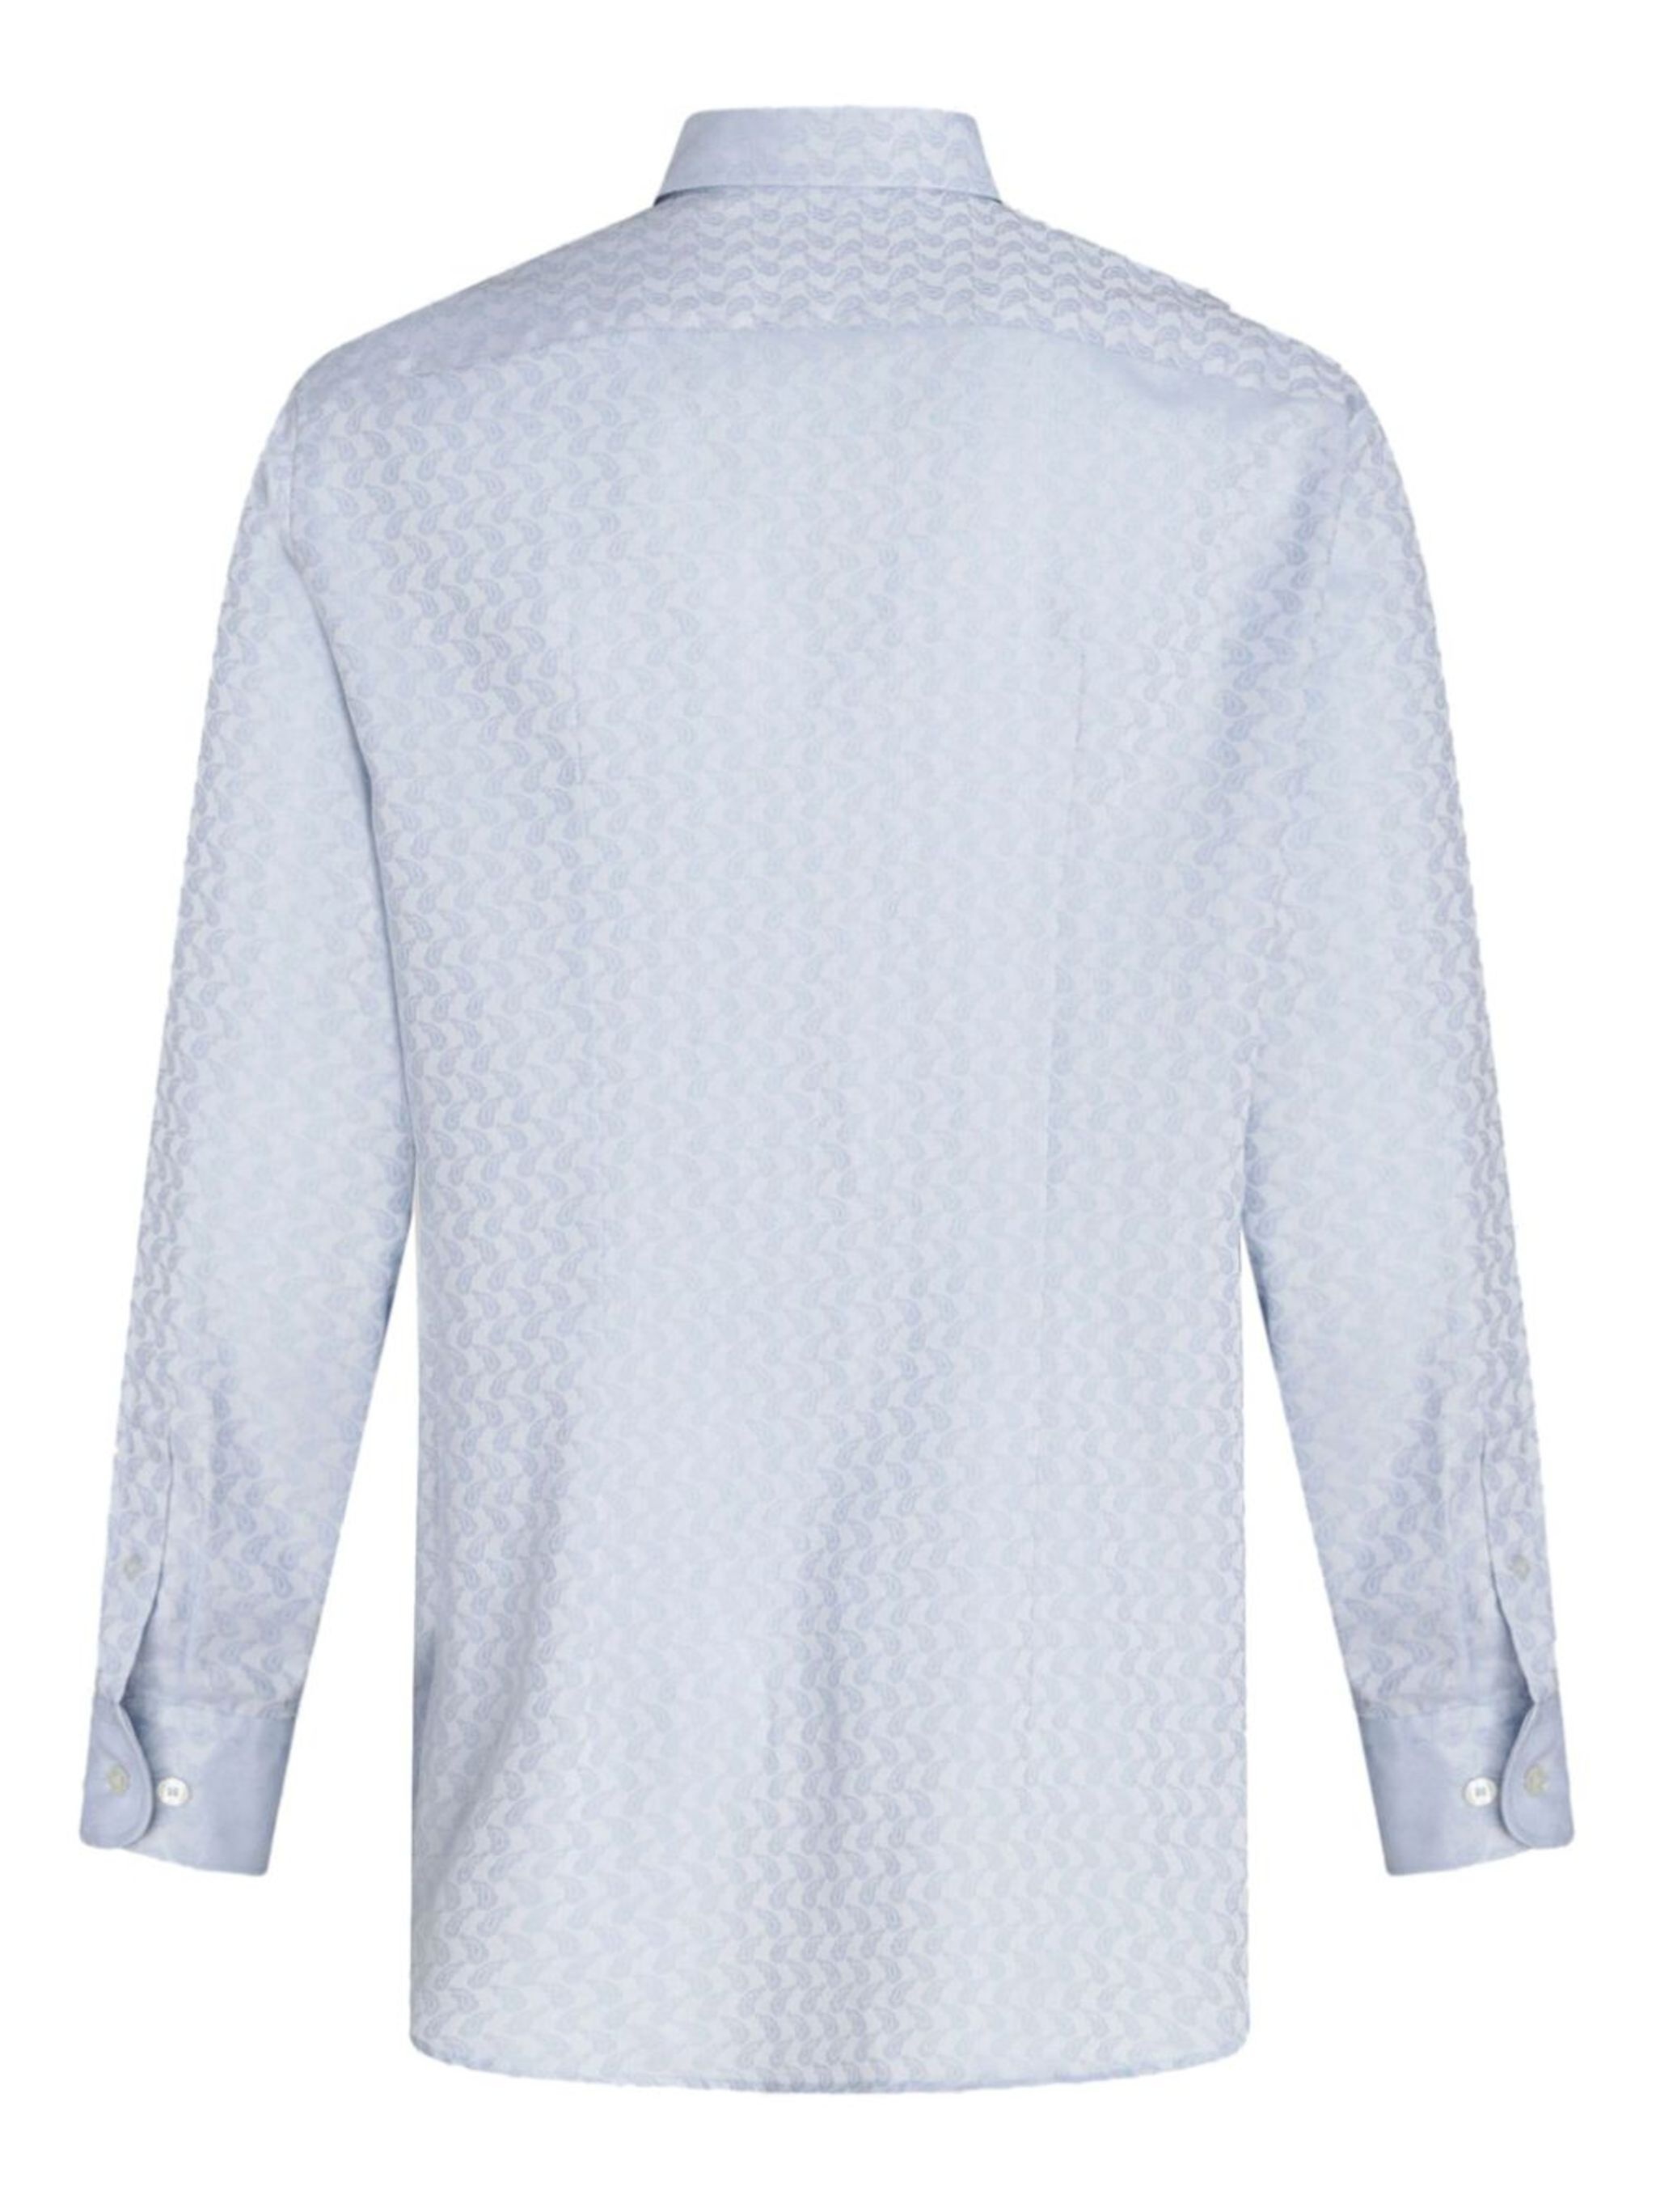 micro-paisley jacquard shirt - 5